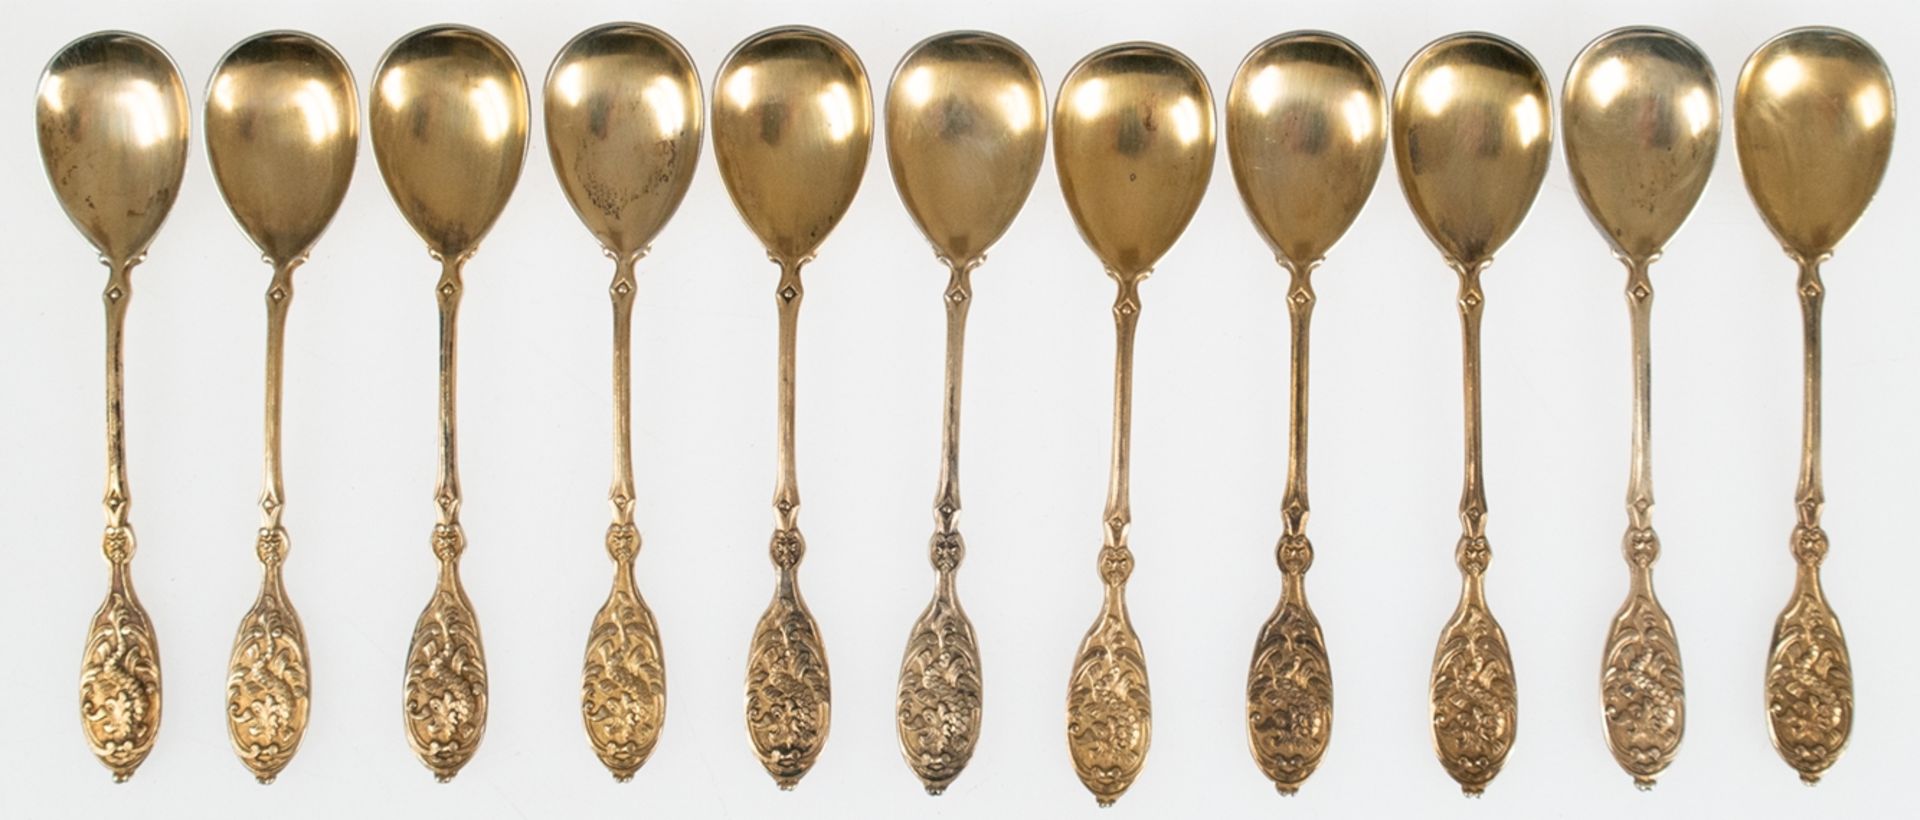 11 Mokka-Löffel, 800er Silber vergoldet, reich reliefiert, rücks. Monogramm "TD", ges. 120 g, im Et